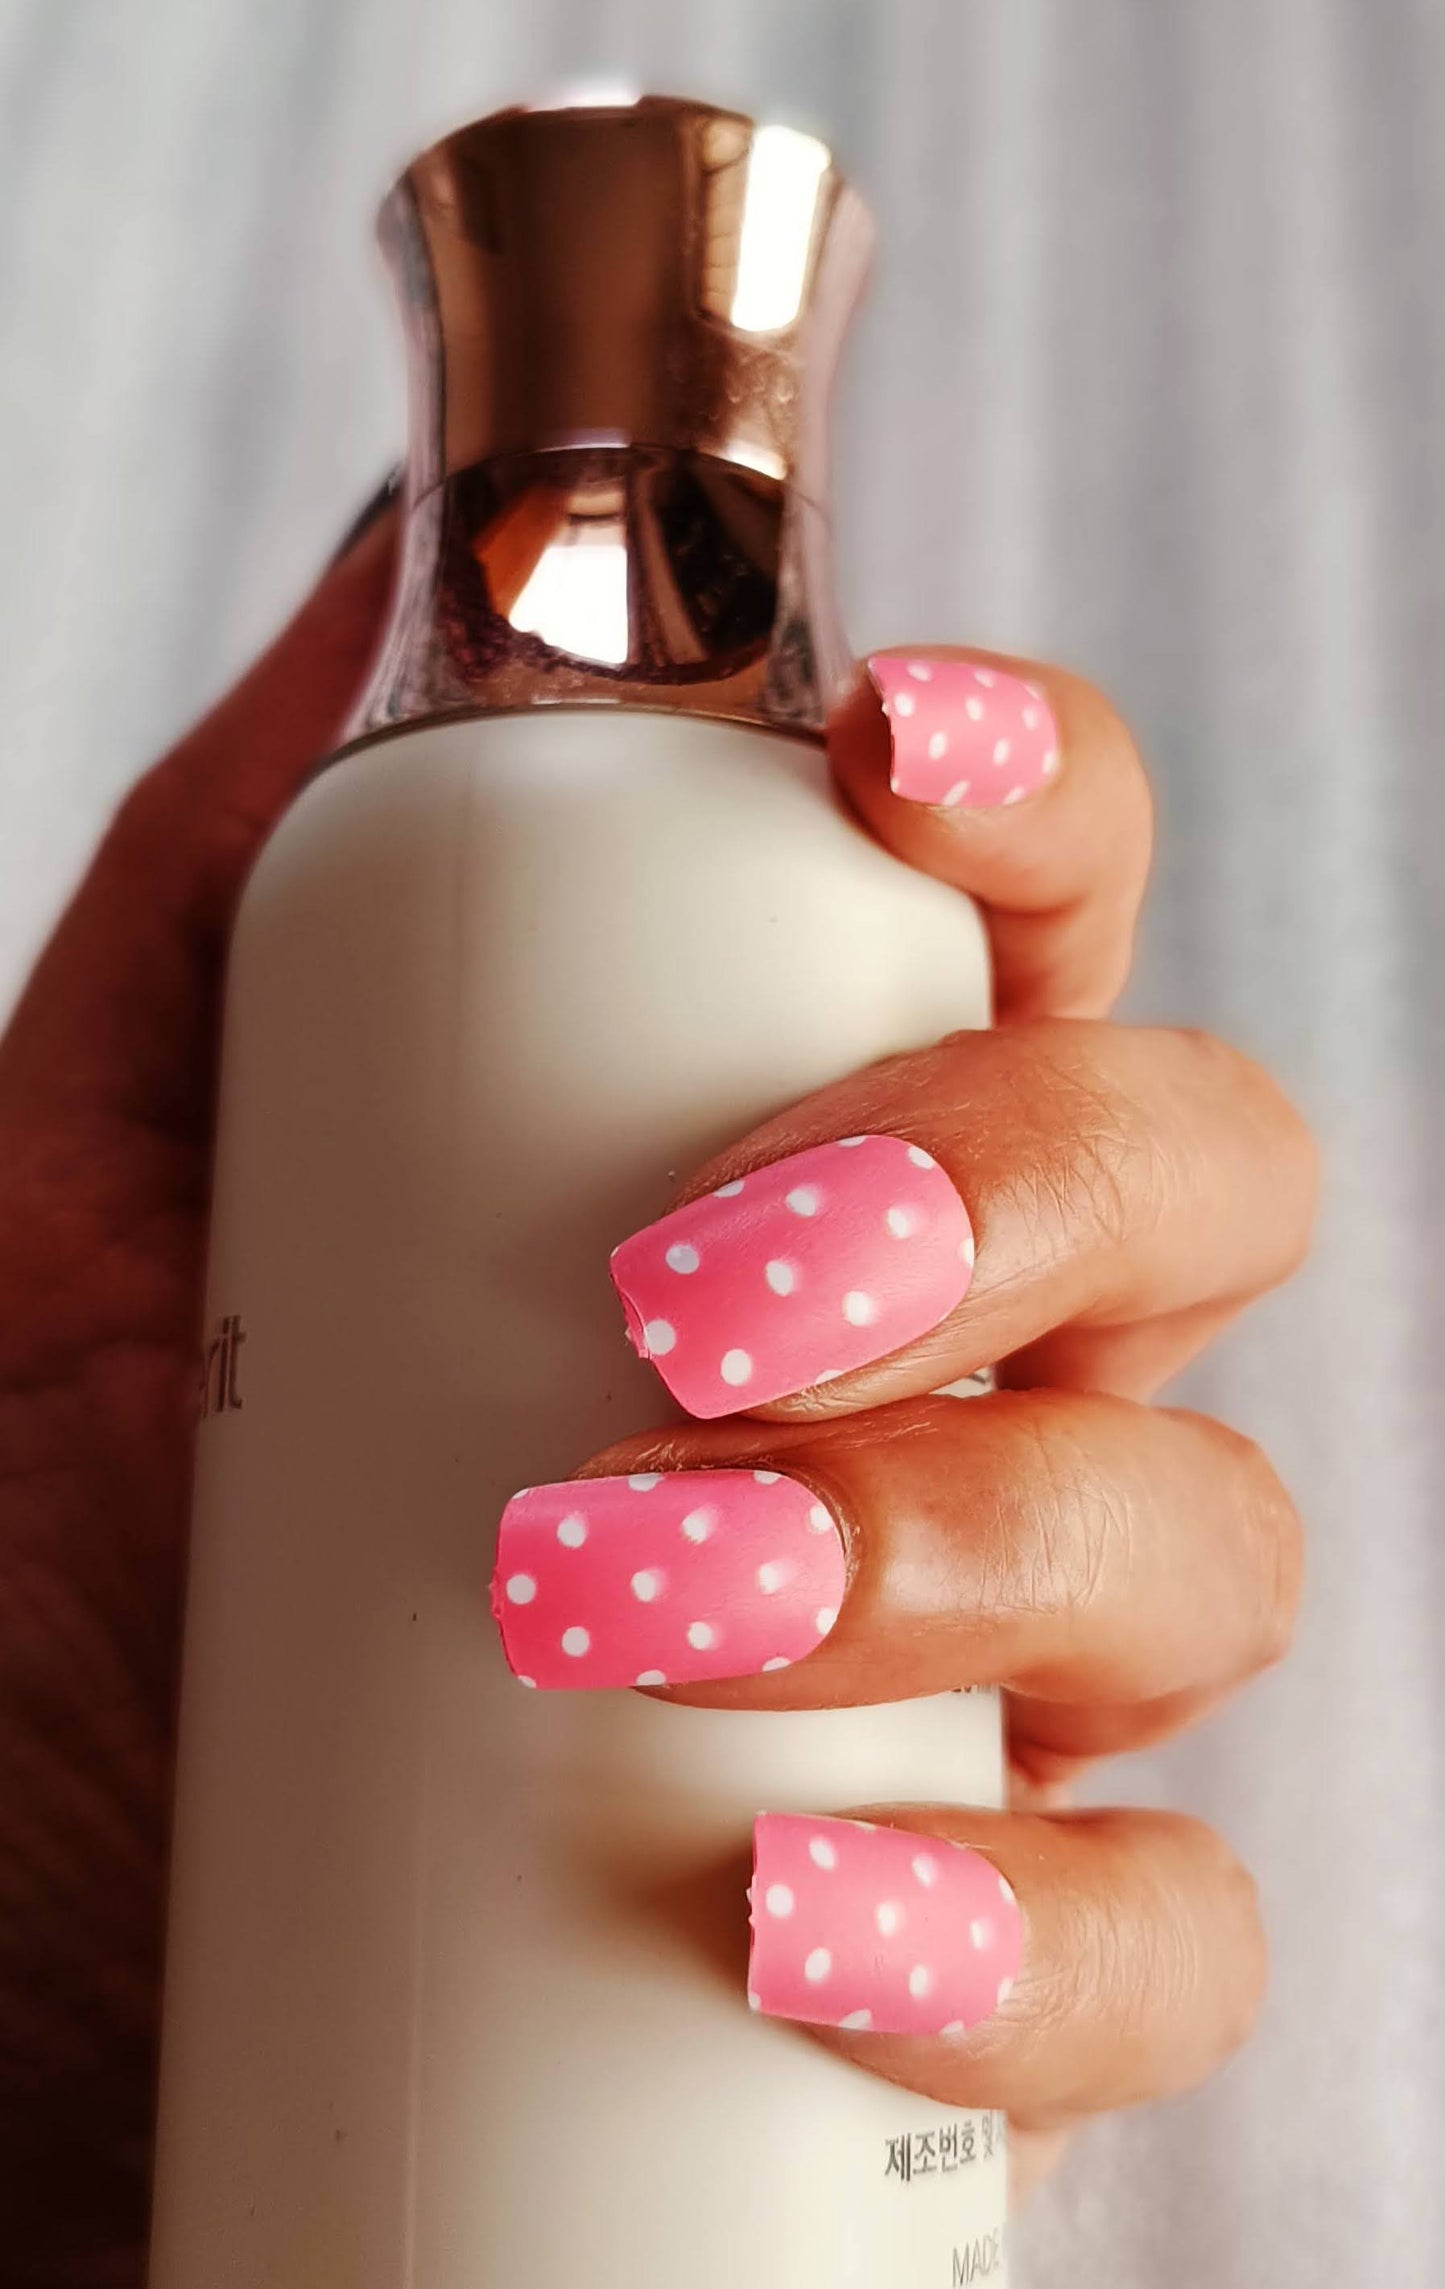 Acrylic/ Press-on Designer Nails with Glue Tabs | Artificial Nails Under 50  - Box Shaped Pink Polka Dots